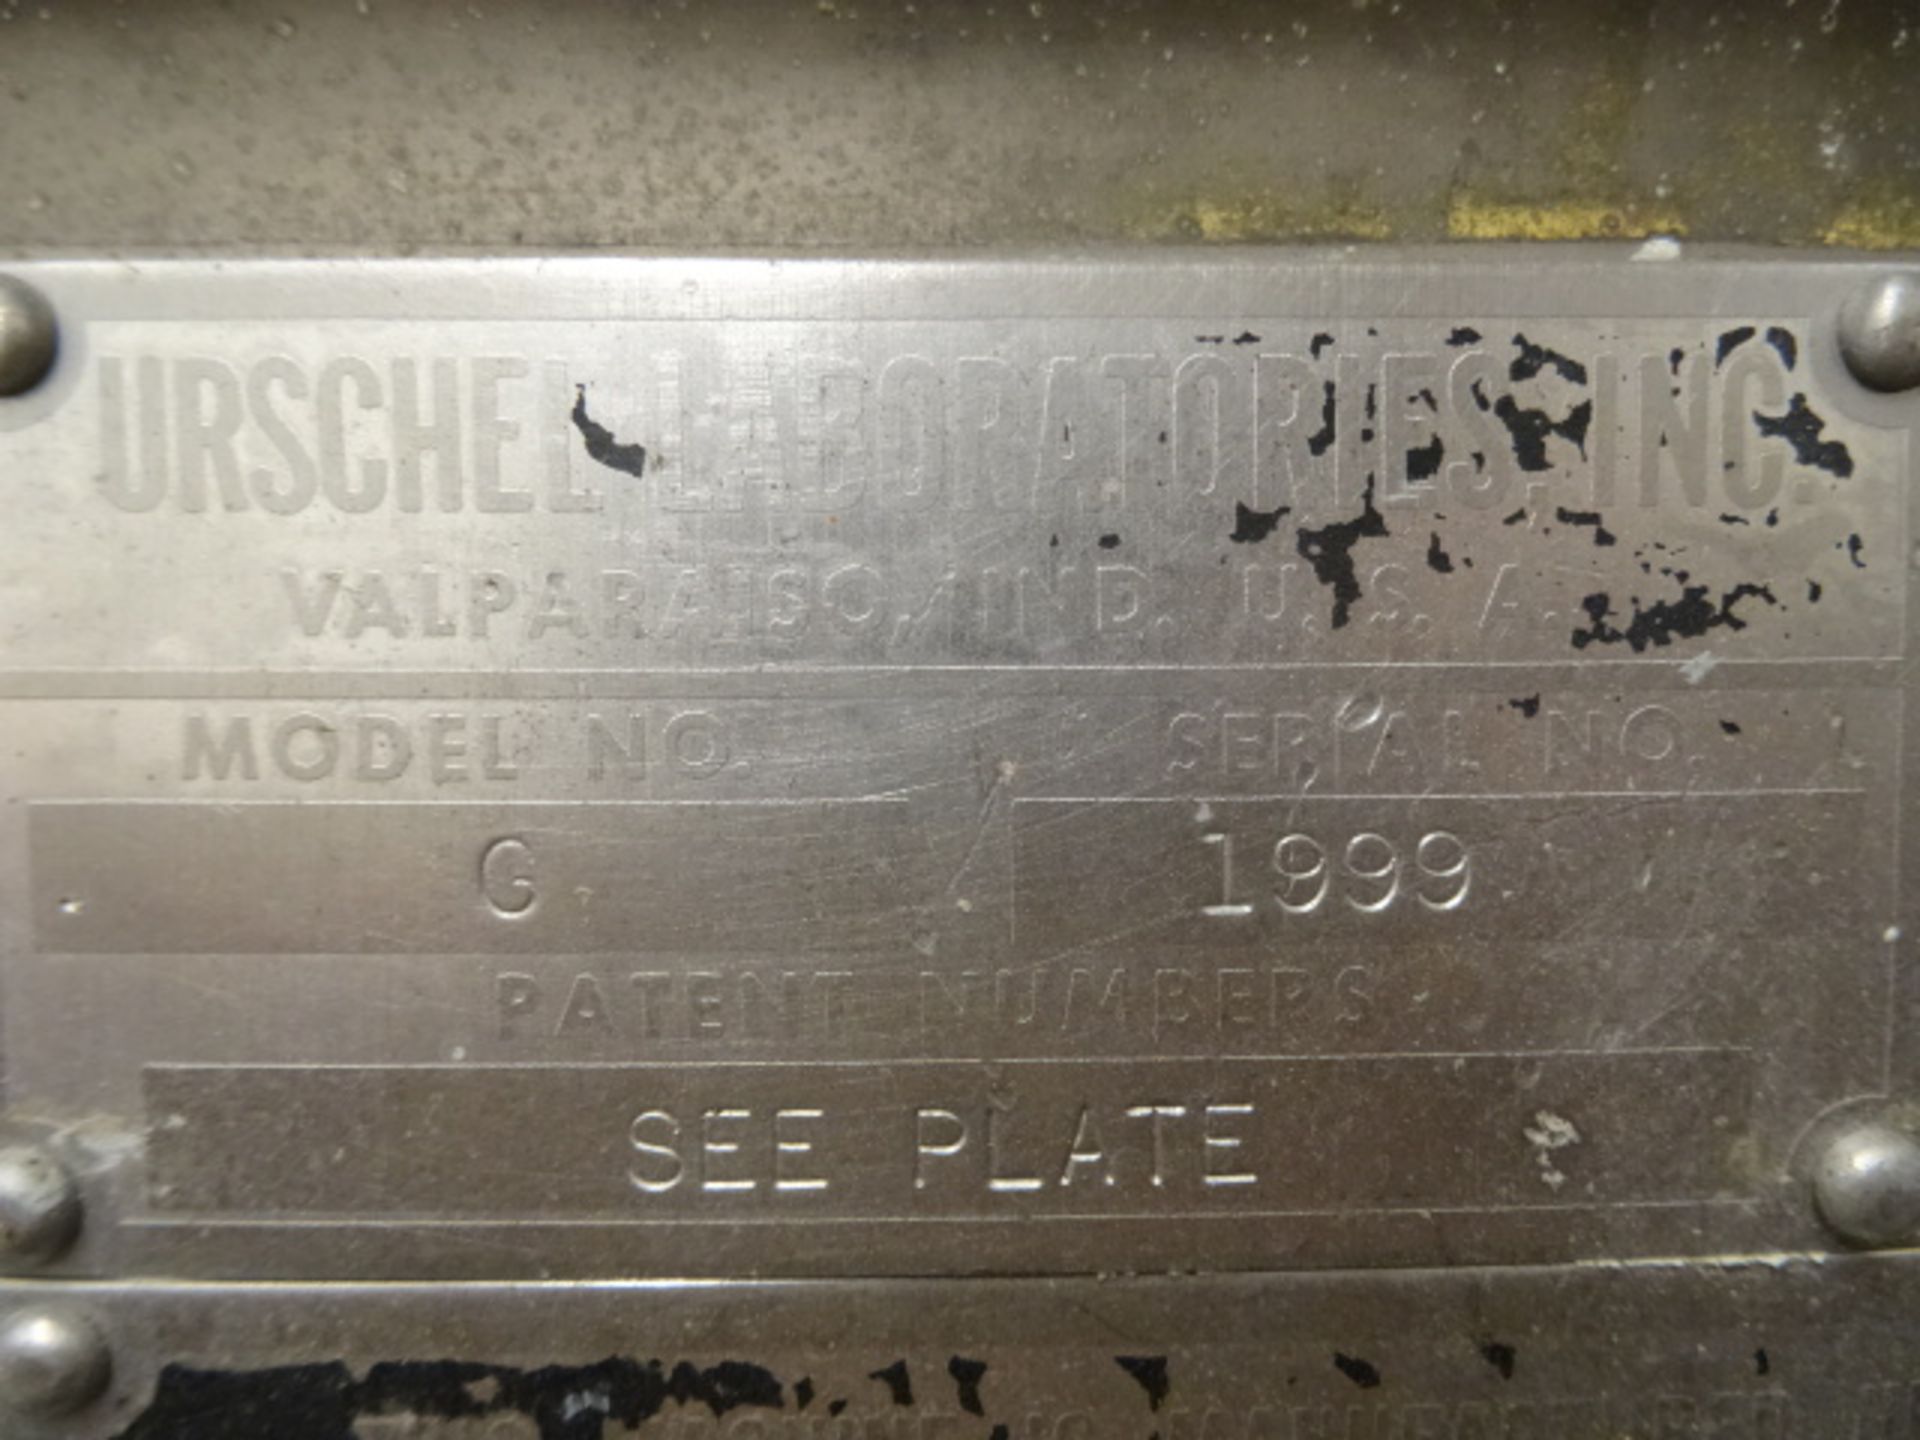 1x, Urschel Model G Chipper / Dicer w/ Blades - Image 8 of 9